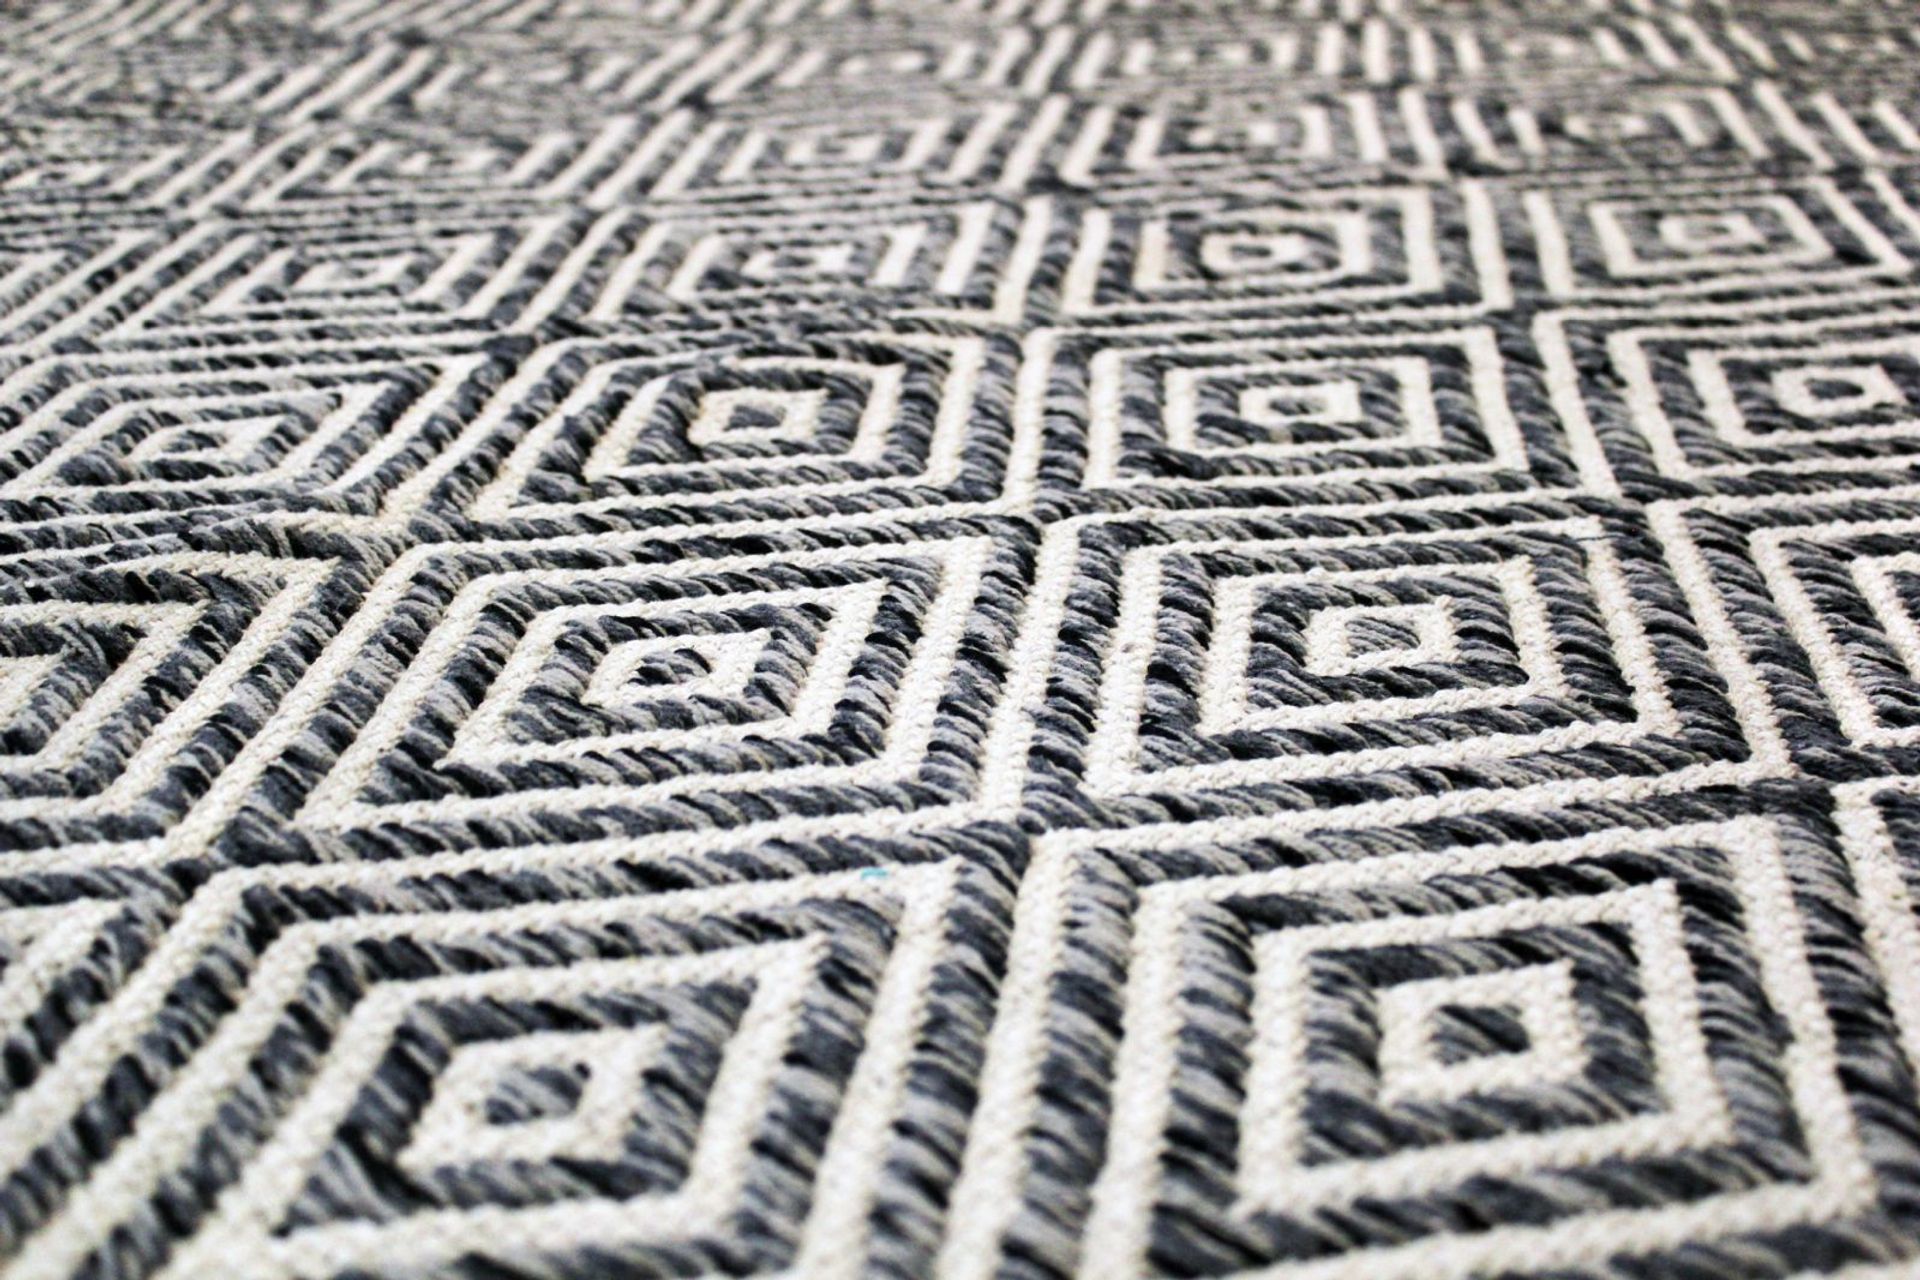 Teppich Aperitif 310 Grau 160 cm x 230 cm